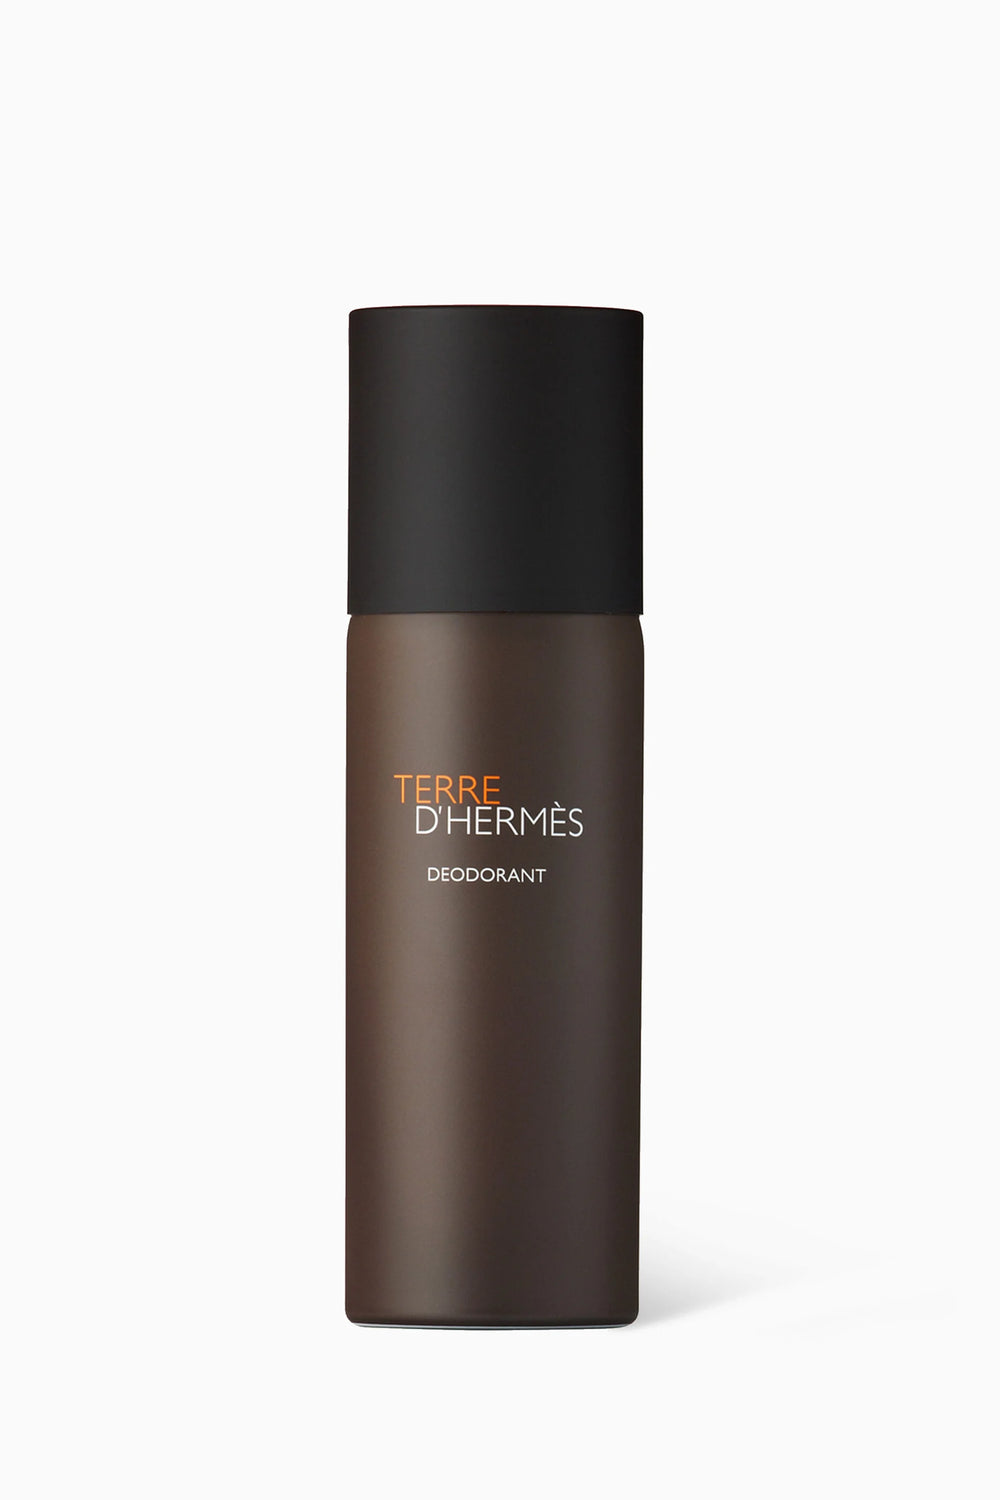 Hermès - Terre d'Hermès Deodorant Spray, 150ml